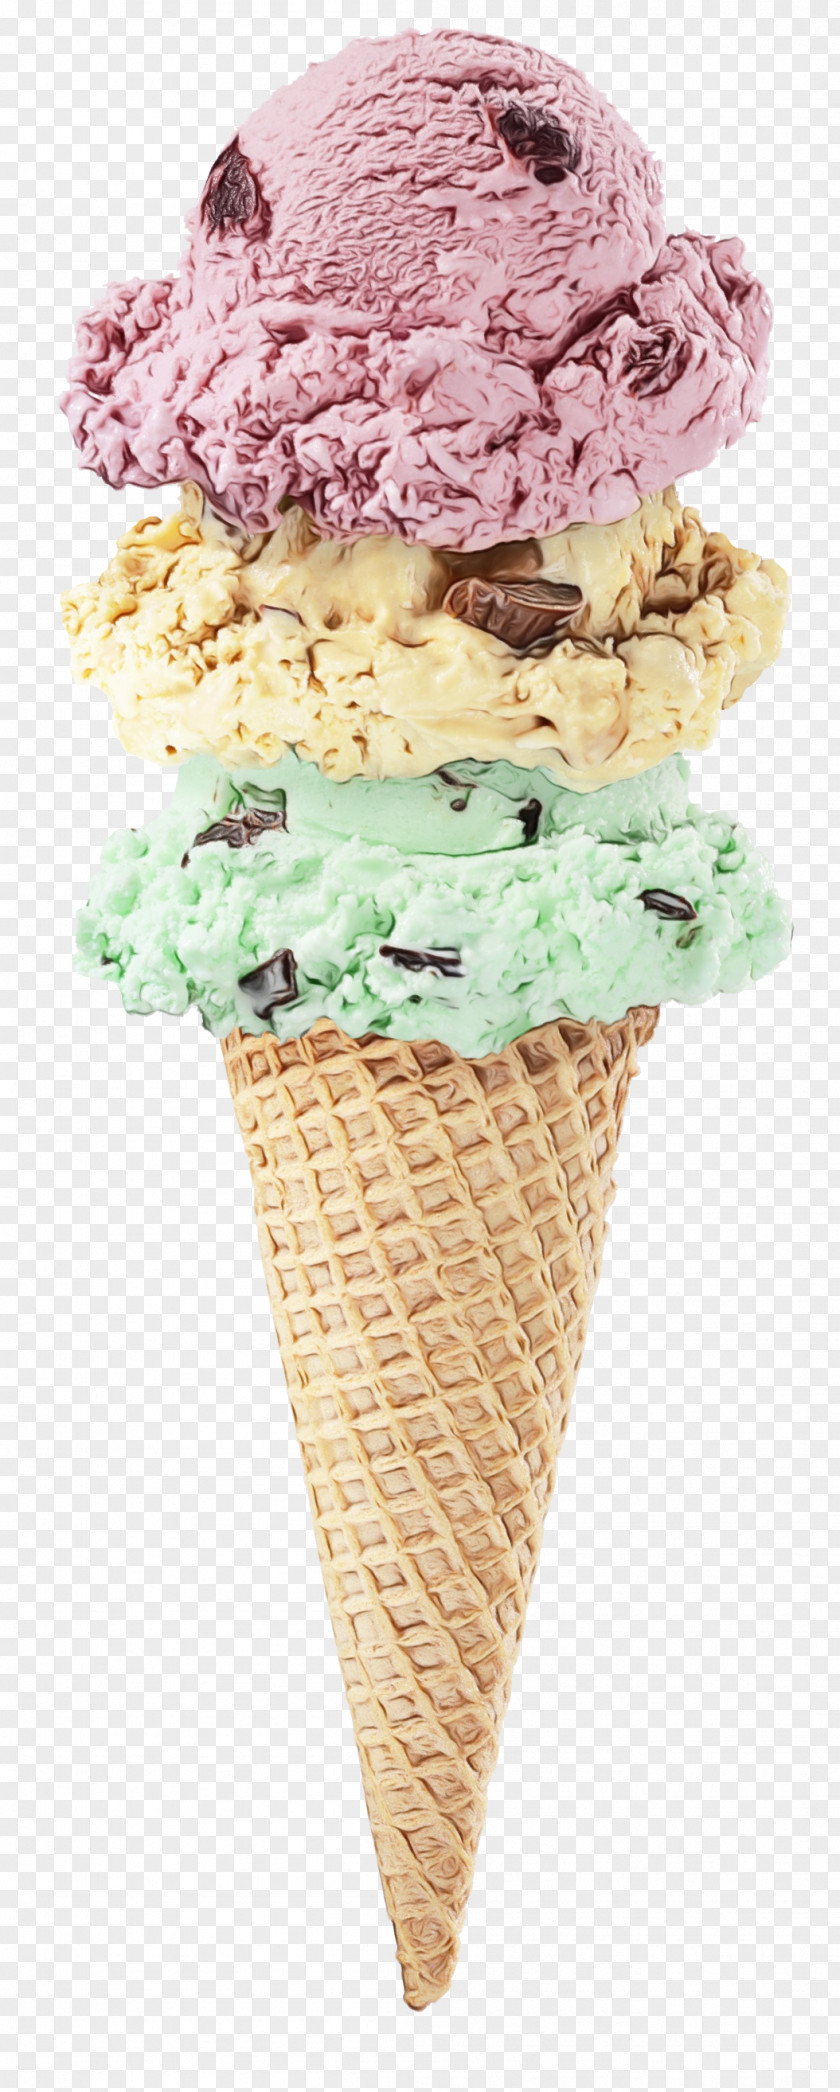 Dondurma Snack Ice Cream Cone Background PNG